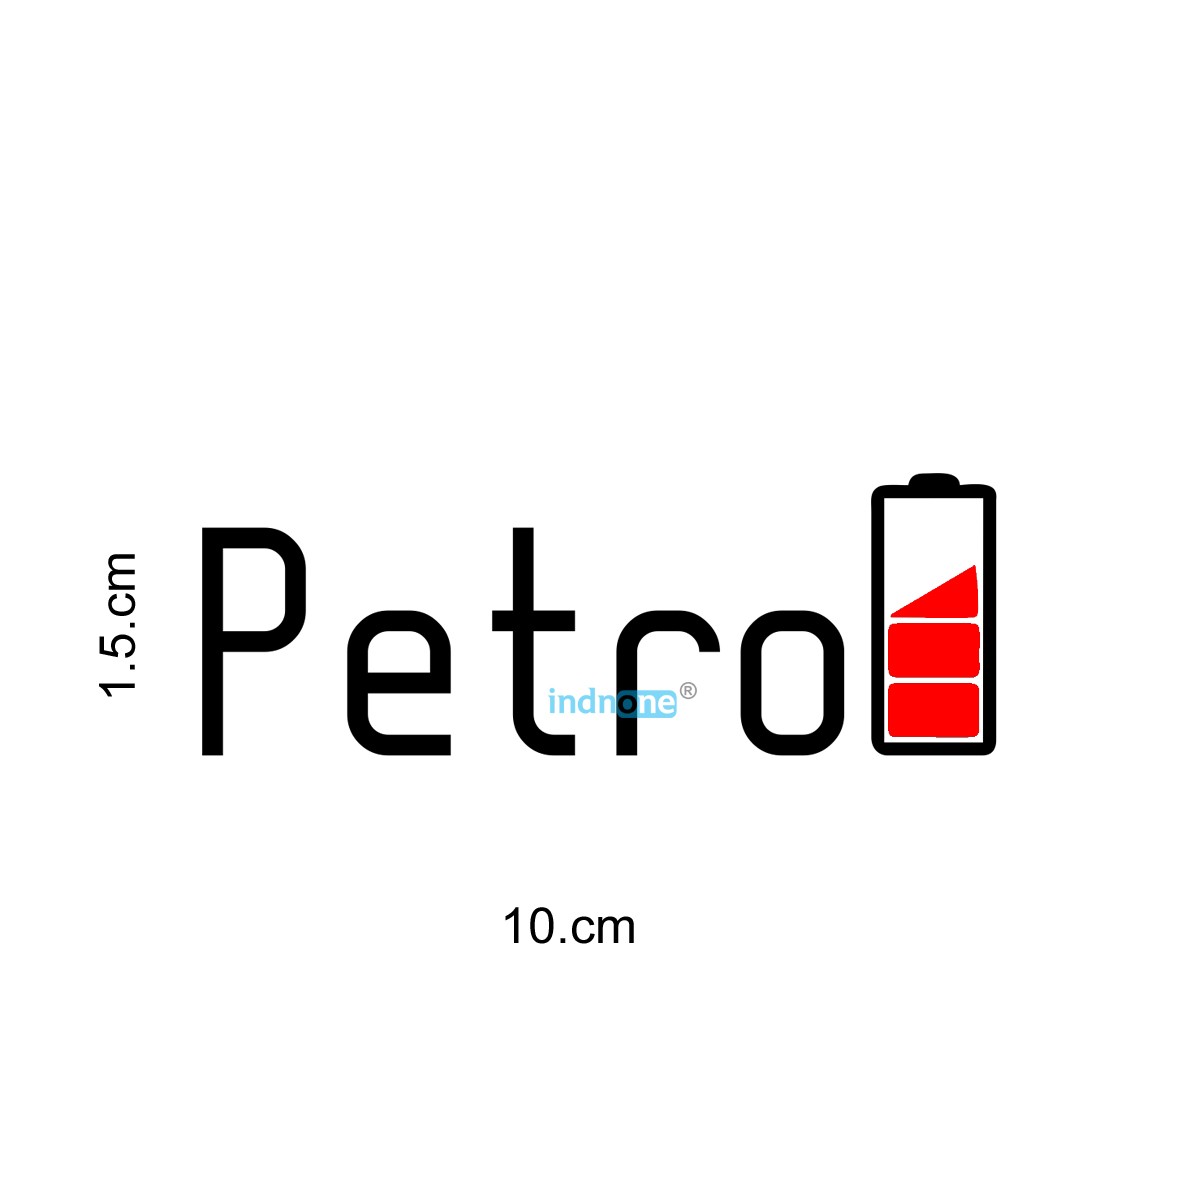 indnone® Battery Petrol Sticker for Car Fuel Lid Color Black & Red